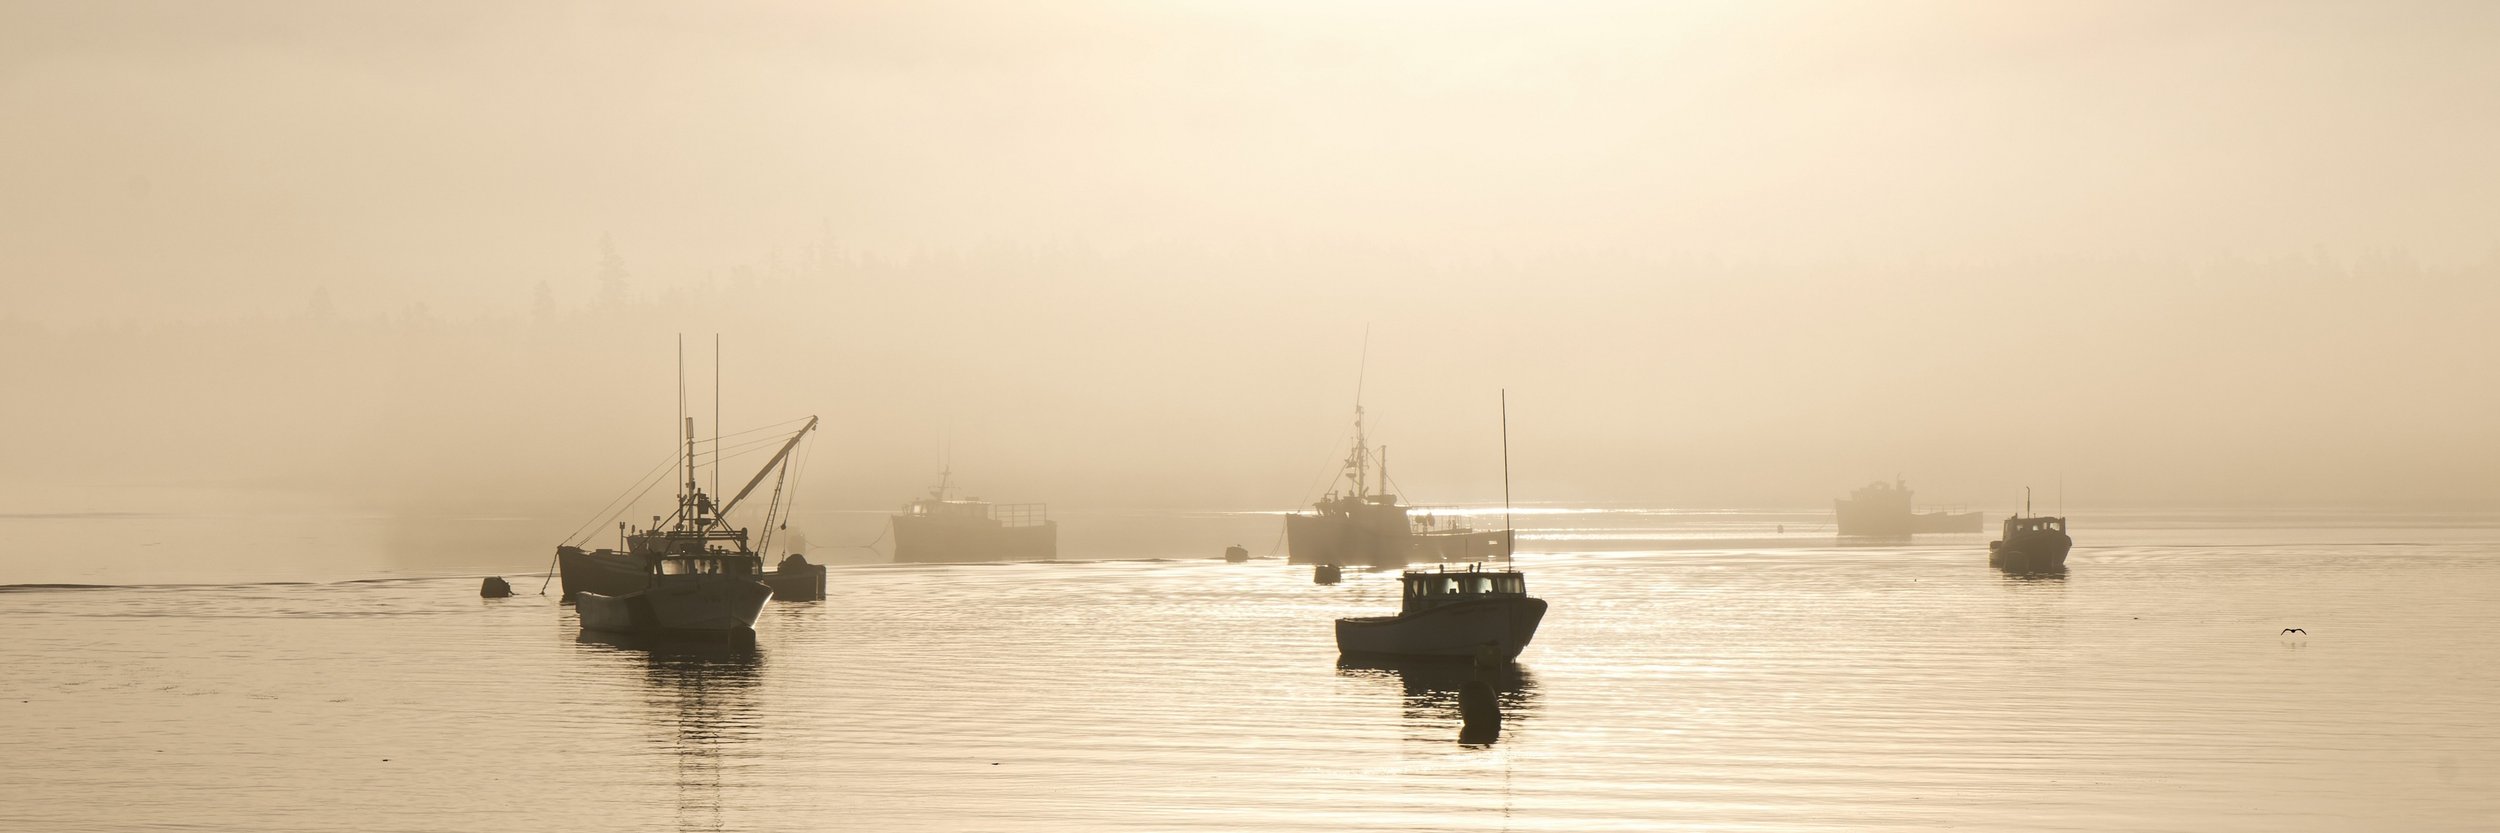 William Balsam - Morning Fog Greets the Fleet, Lubec, ME.jpg